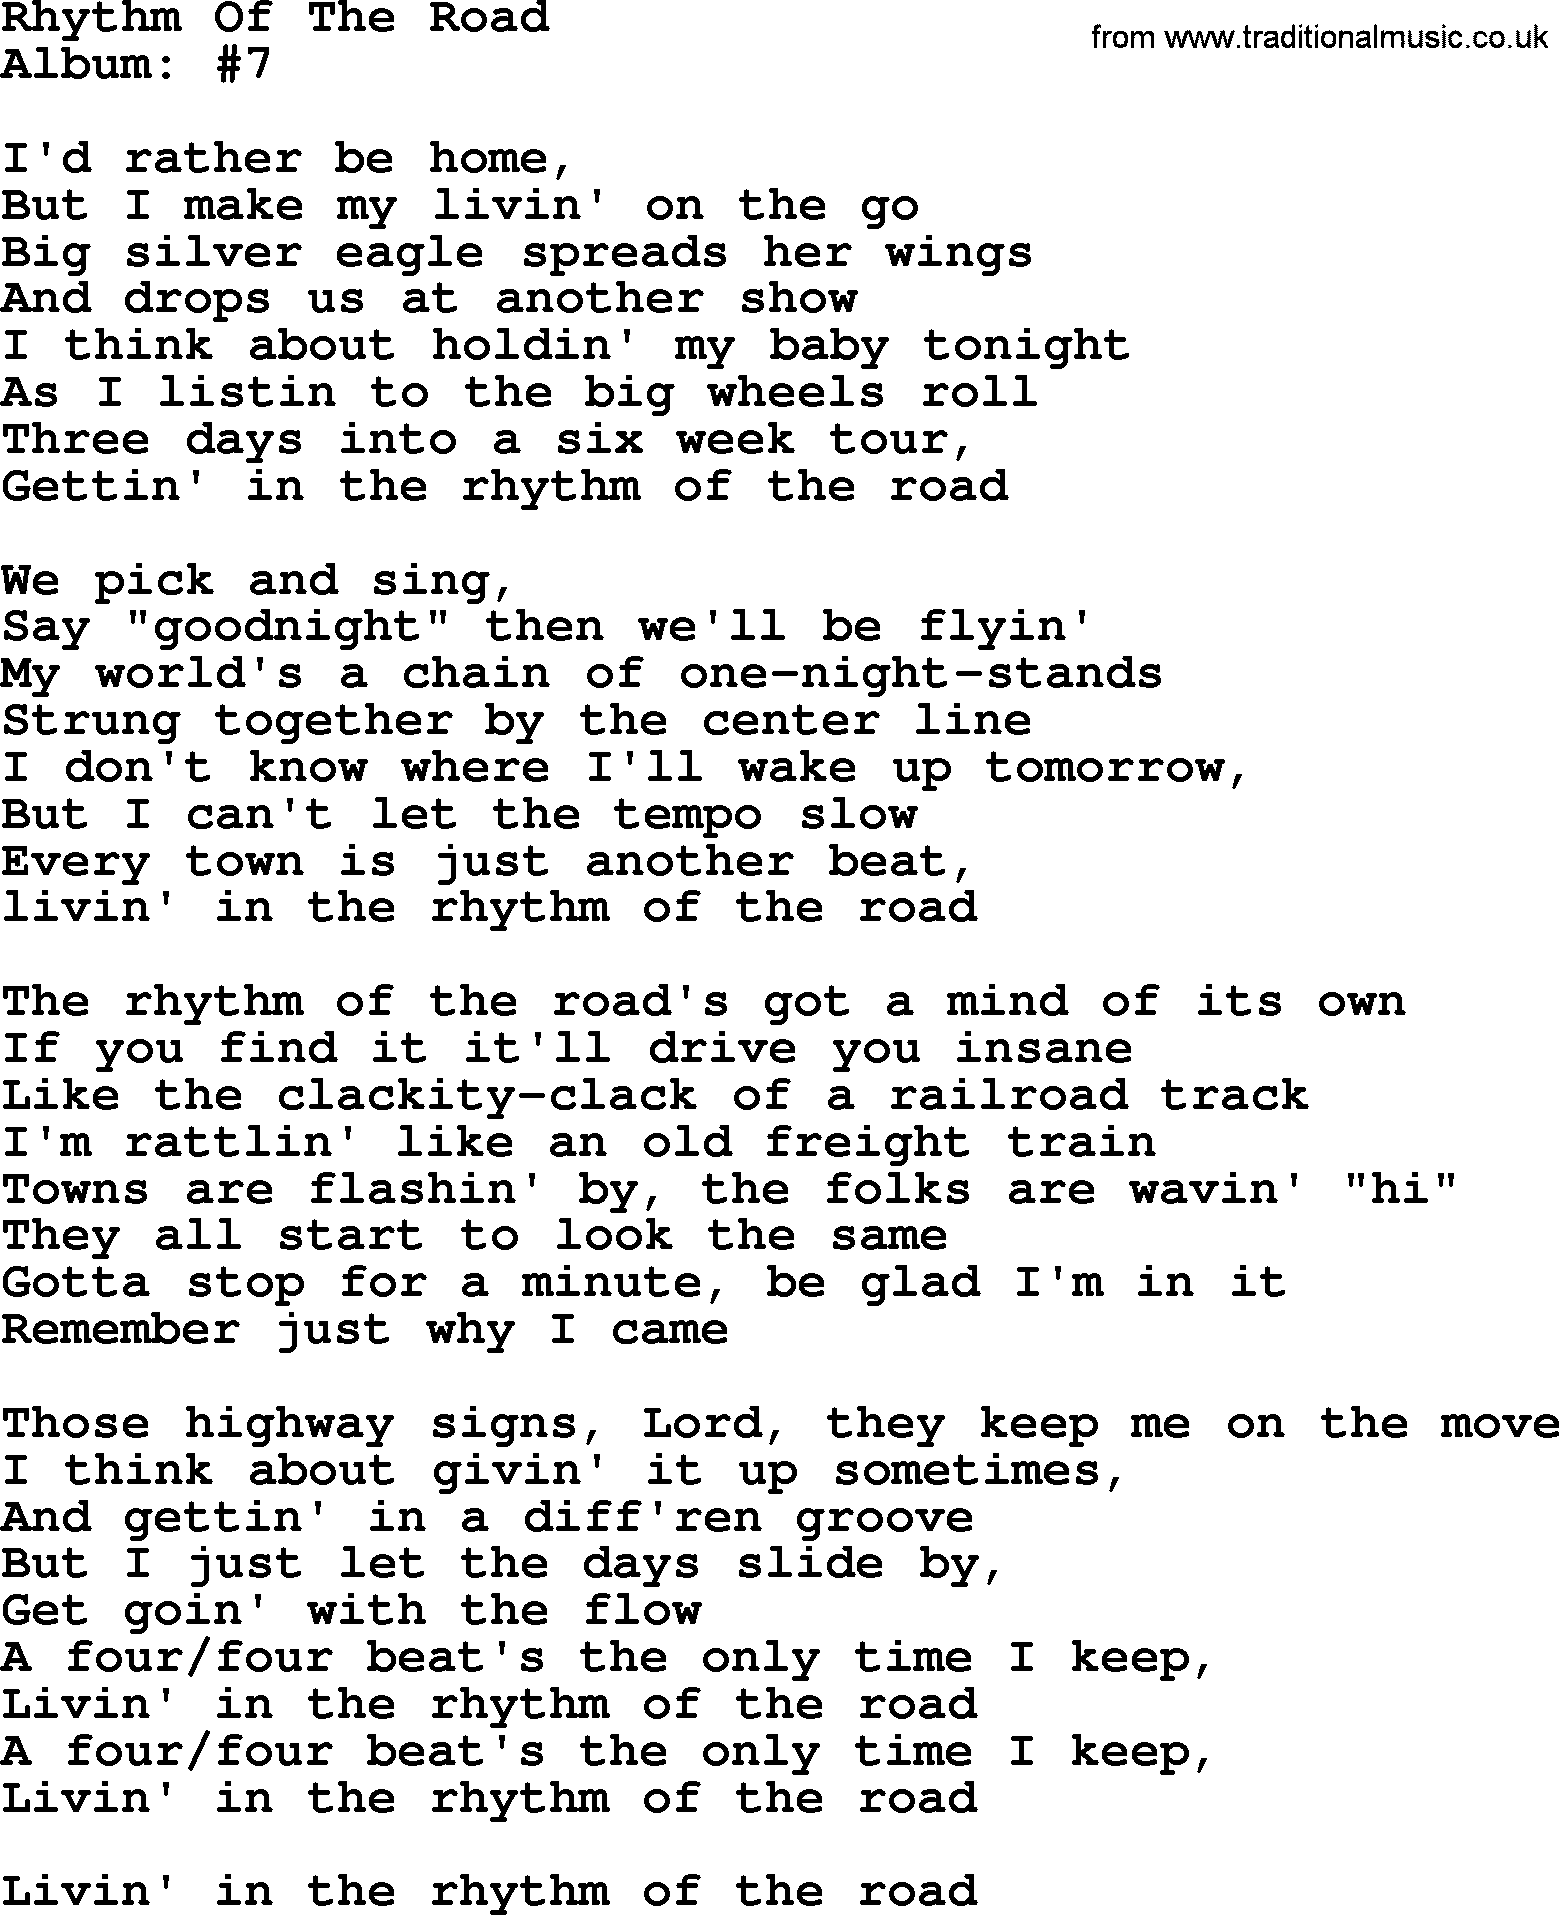 George Strait song: Rhythm Of The Road, lyrics